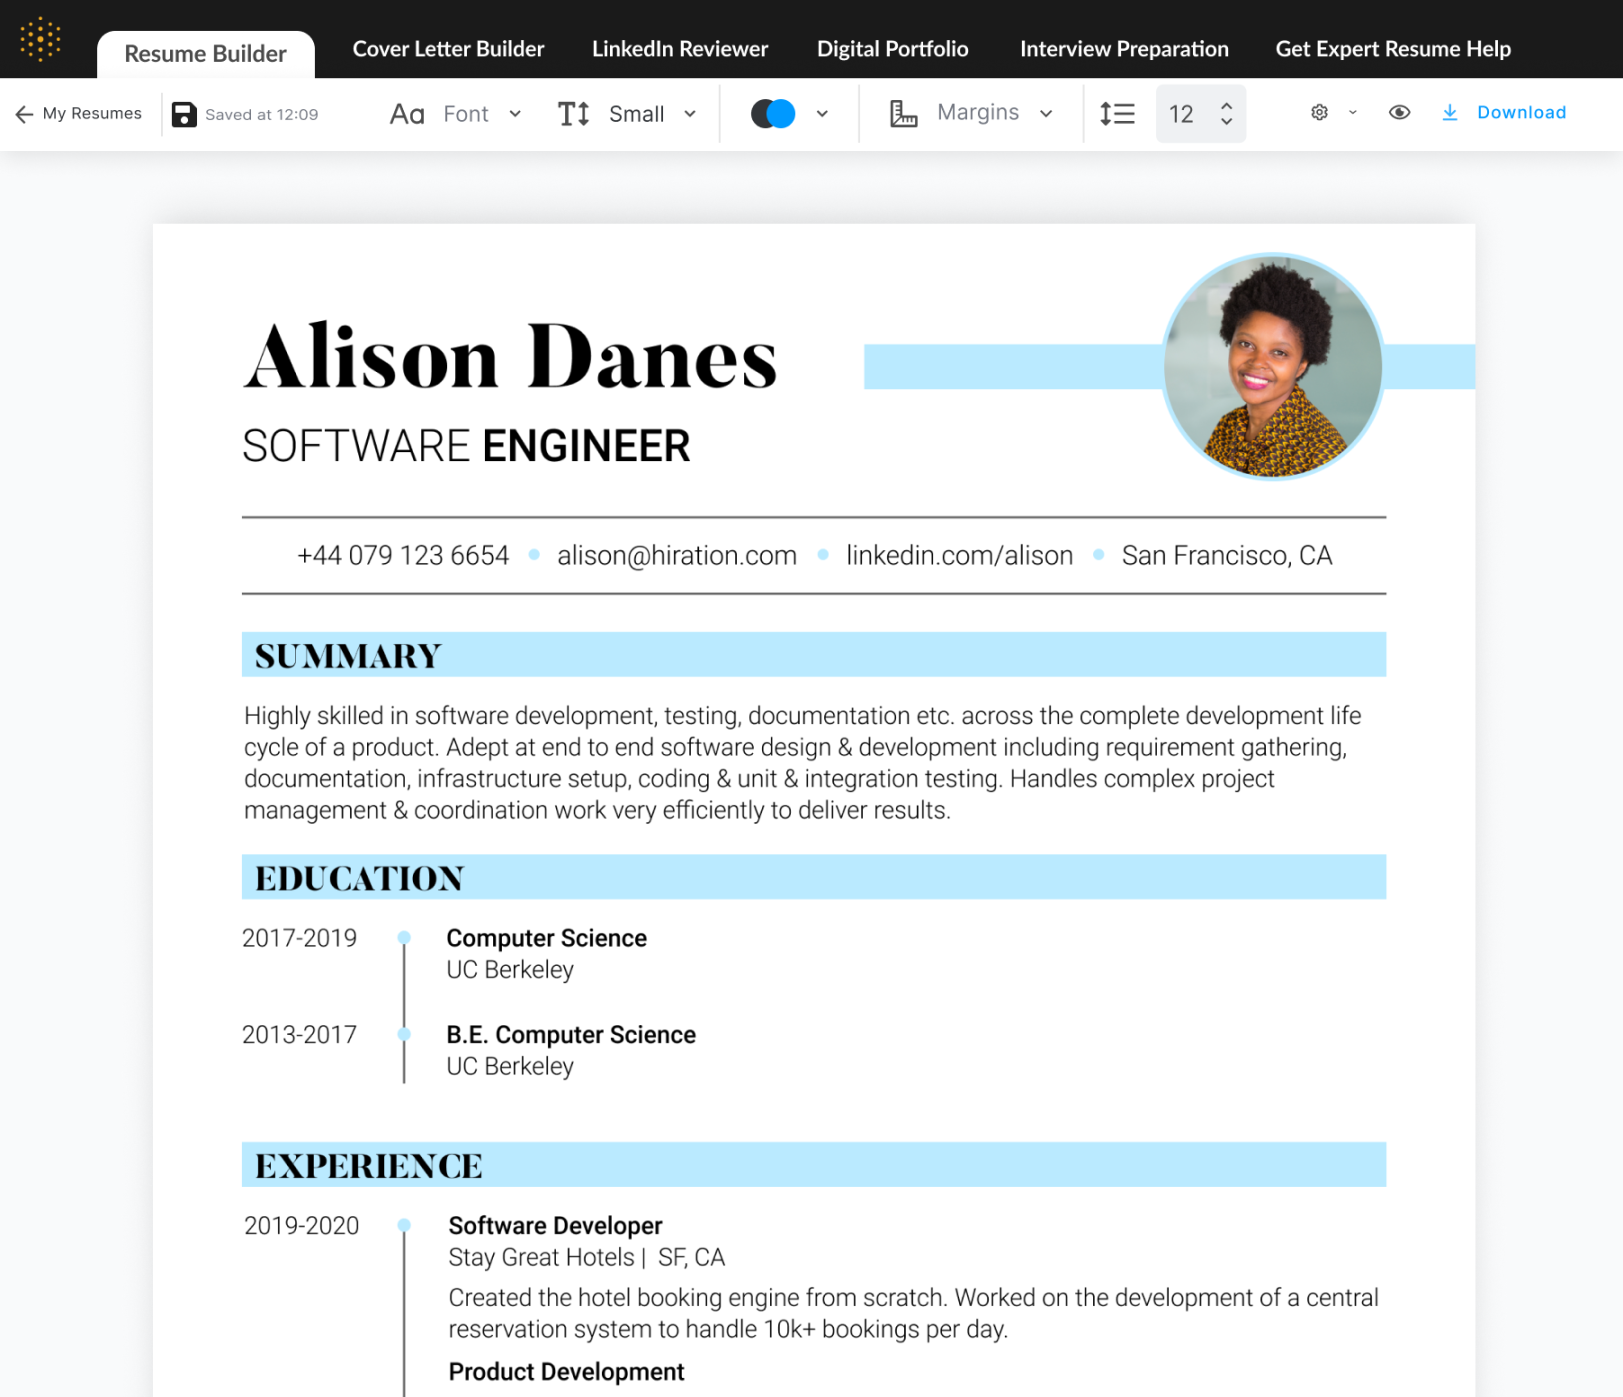 Best Online Resume Builder for Tech Jobs in